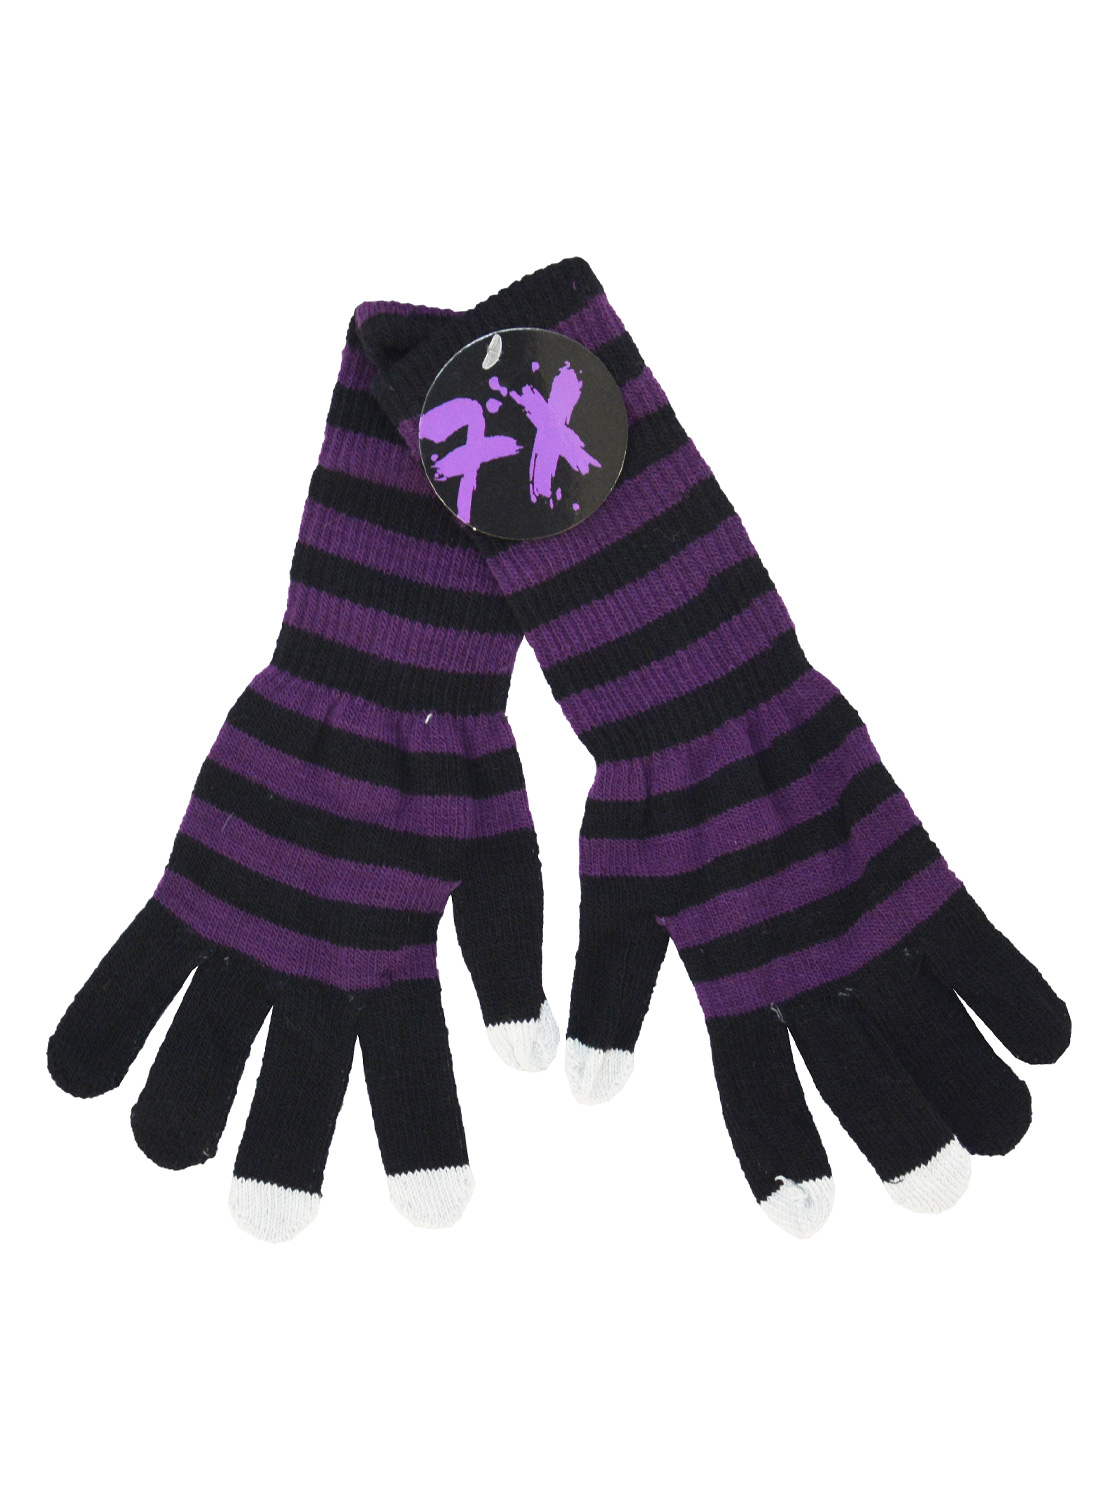 Double Long Black & Purple Gloves